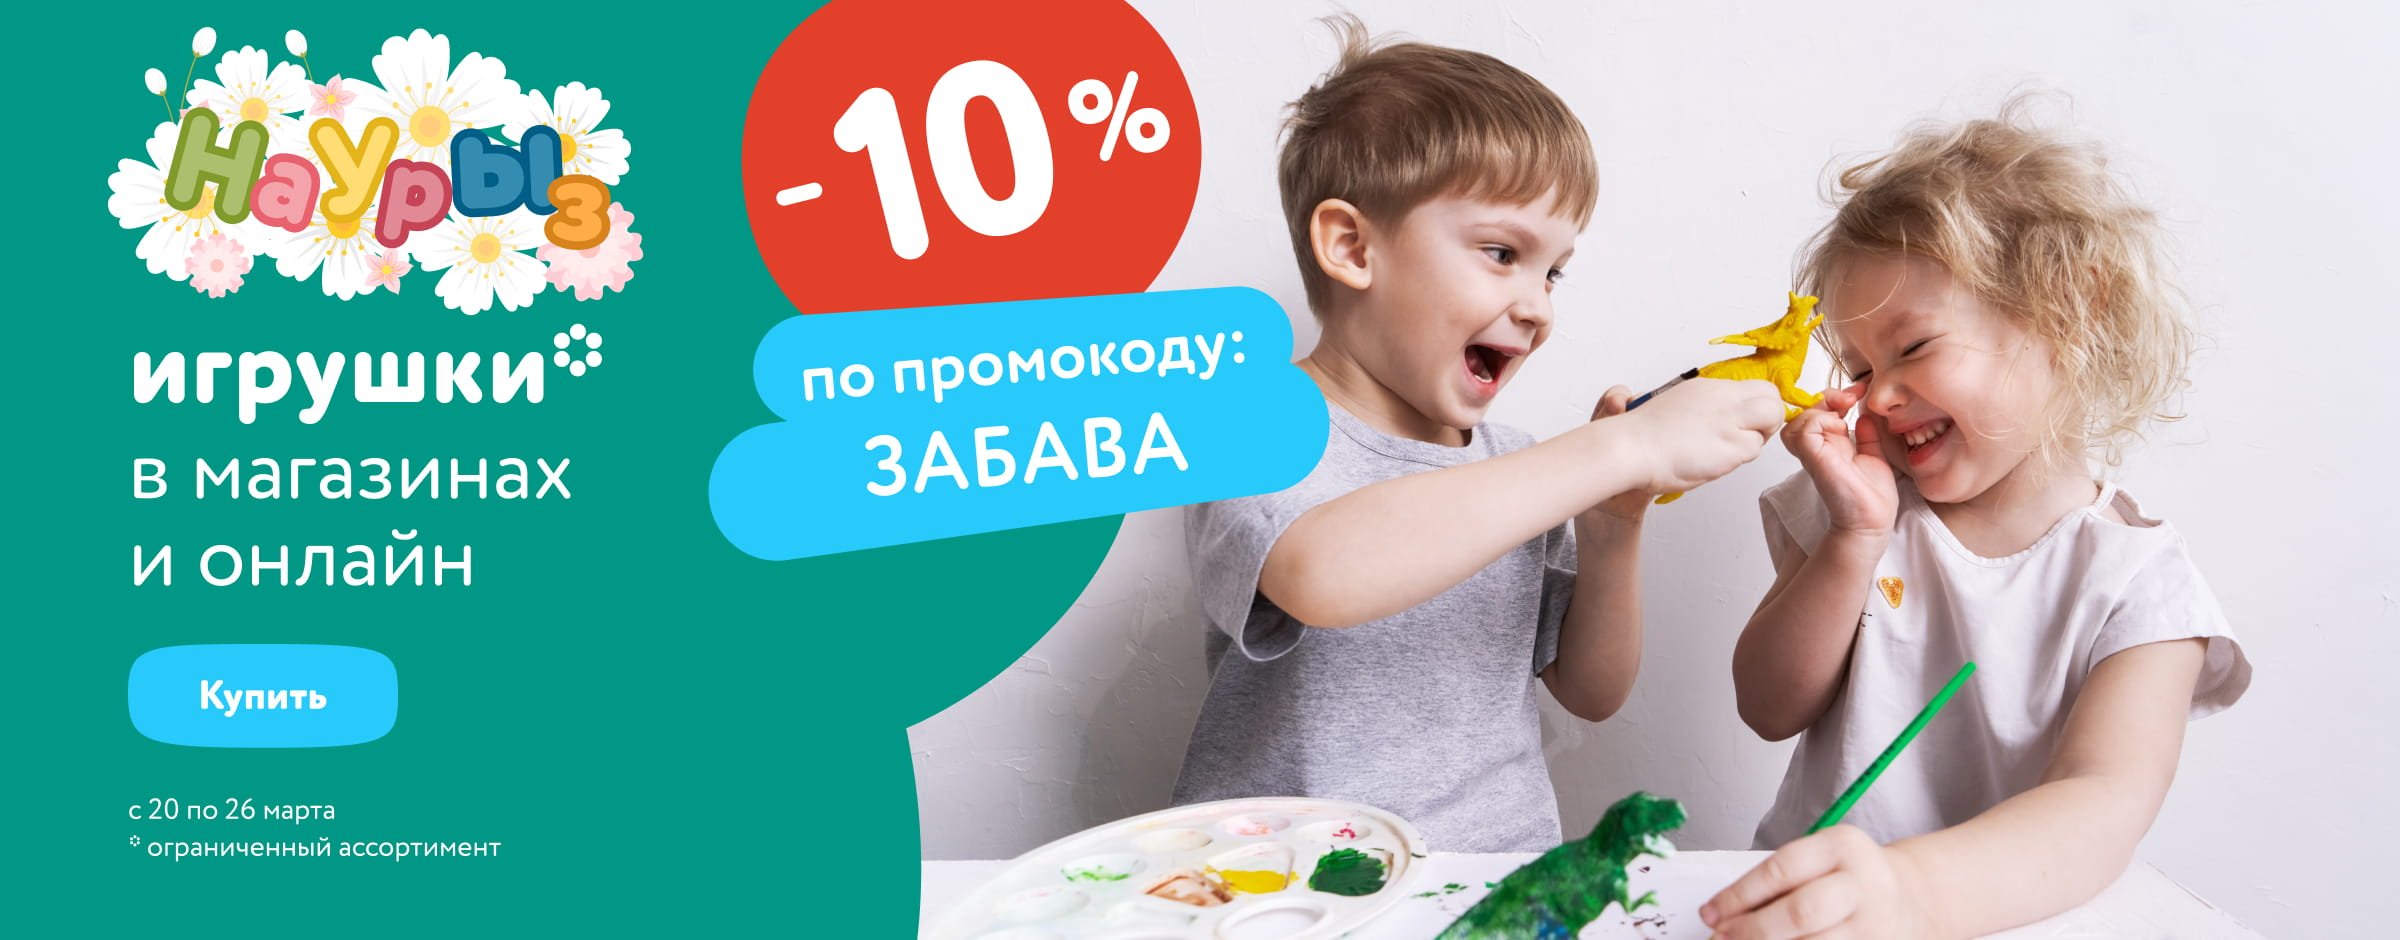 Доп. скидка 10% по промокоду на игрушки_статика категории игрушки +подкат